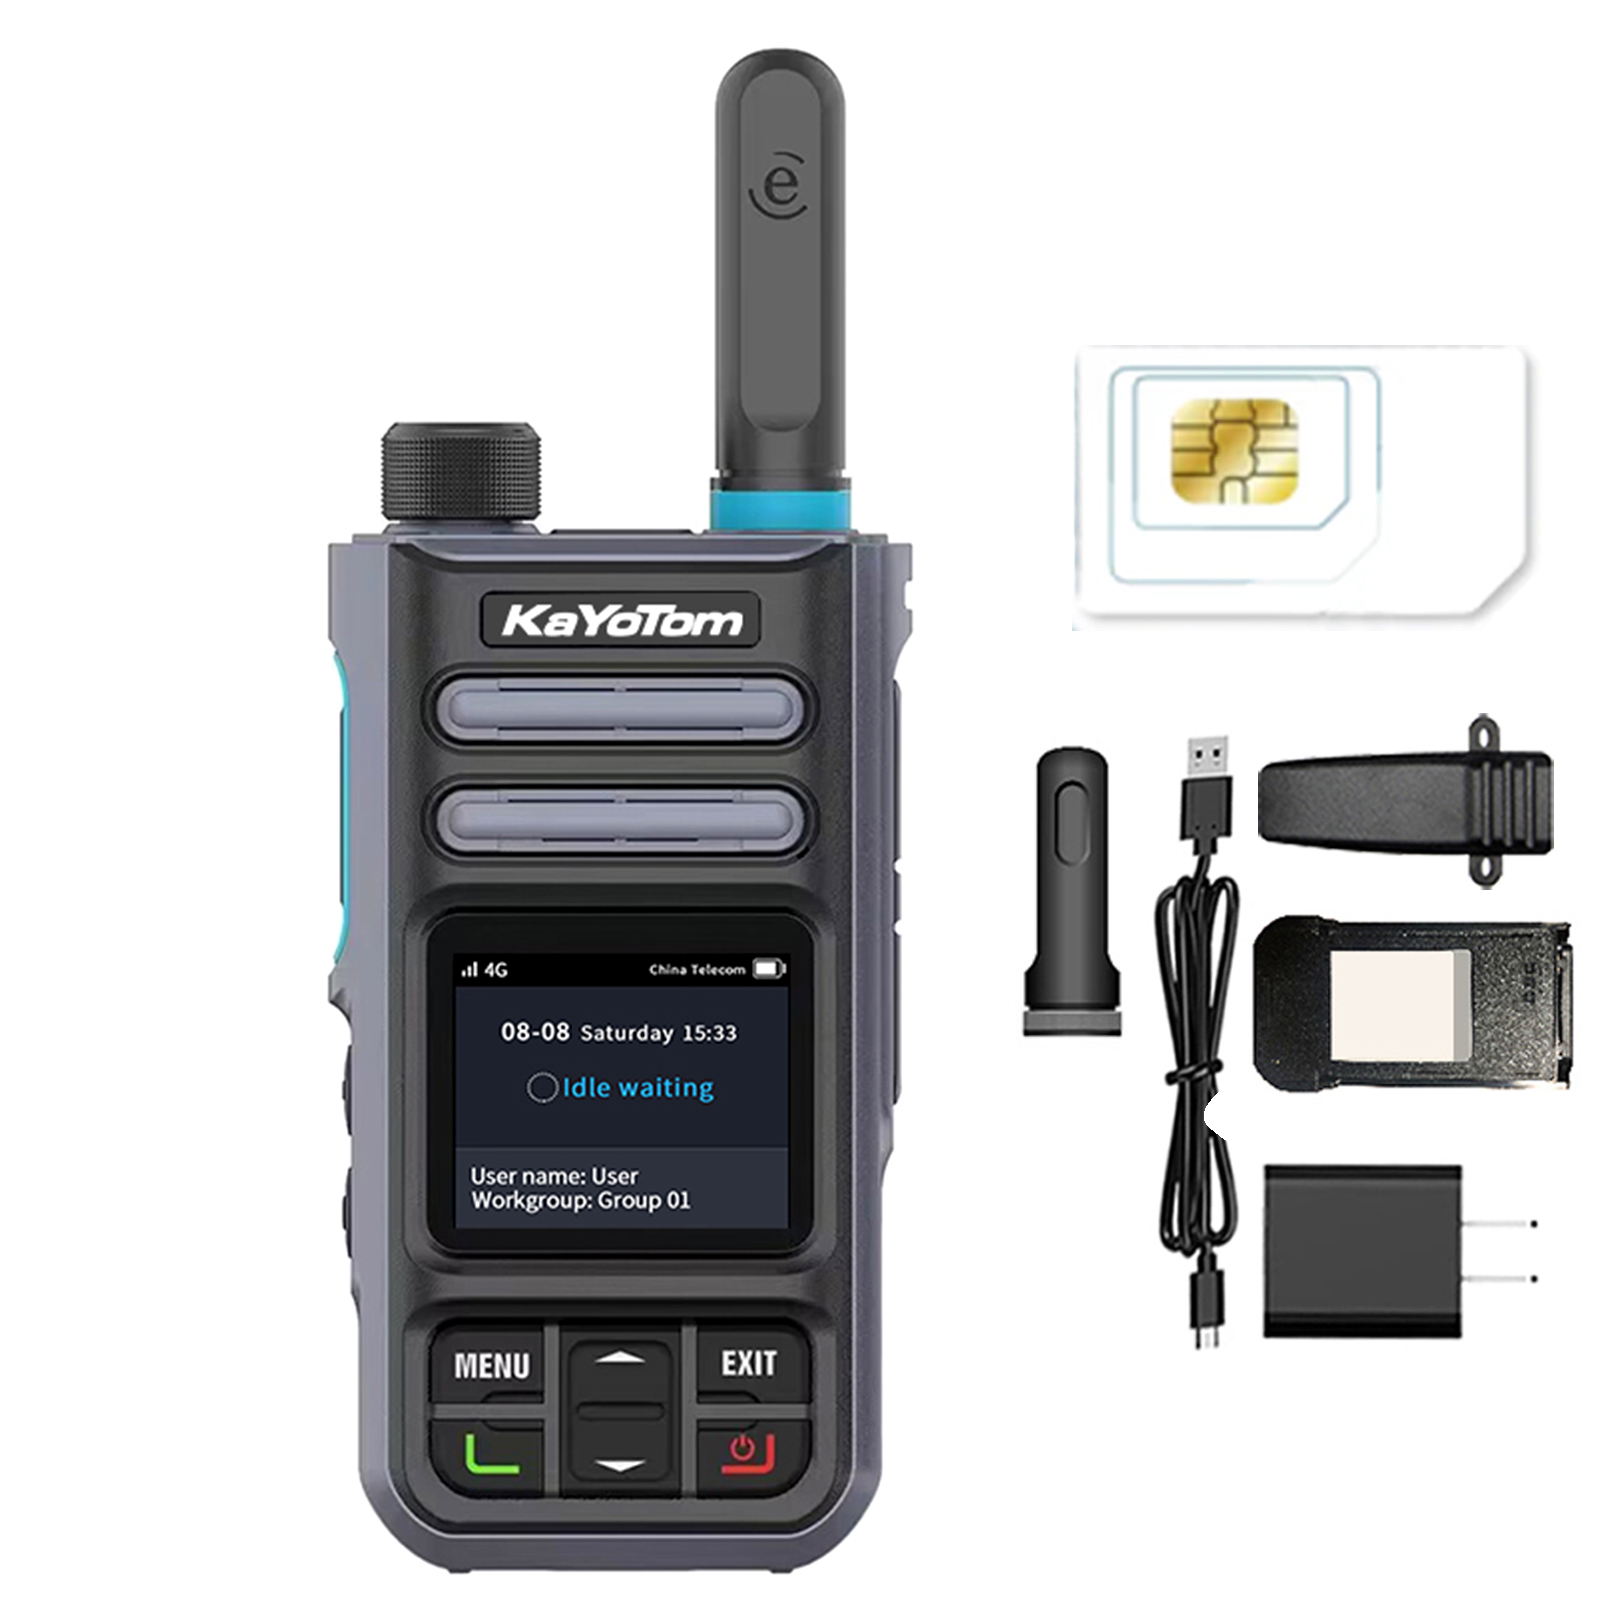 KaYoTom Global available M16 global-ptt POC 4G zello walkie-talkie two-way radio Mobile Porfesional network intercom long range communicator